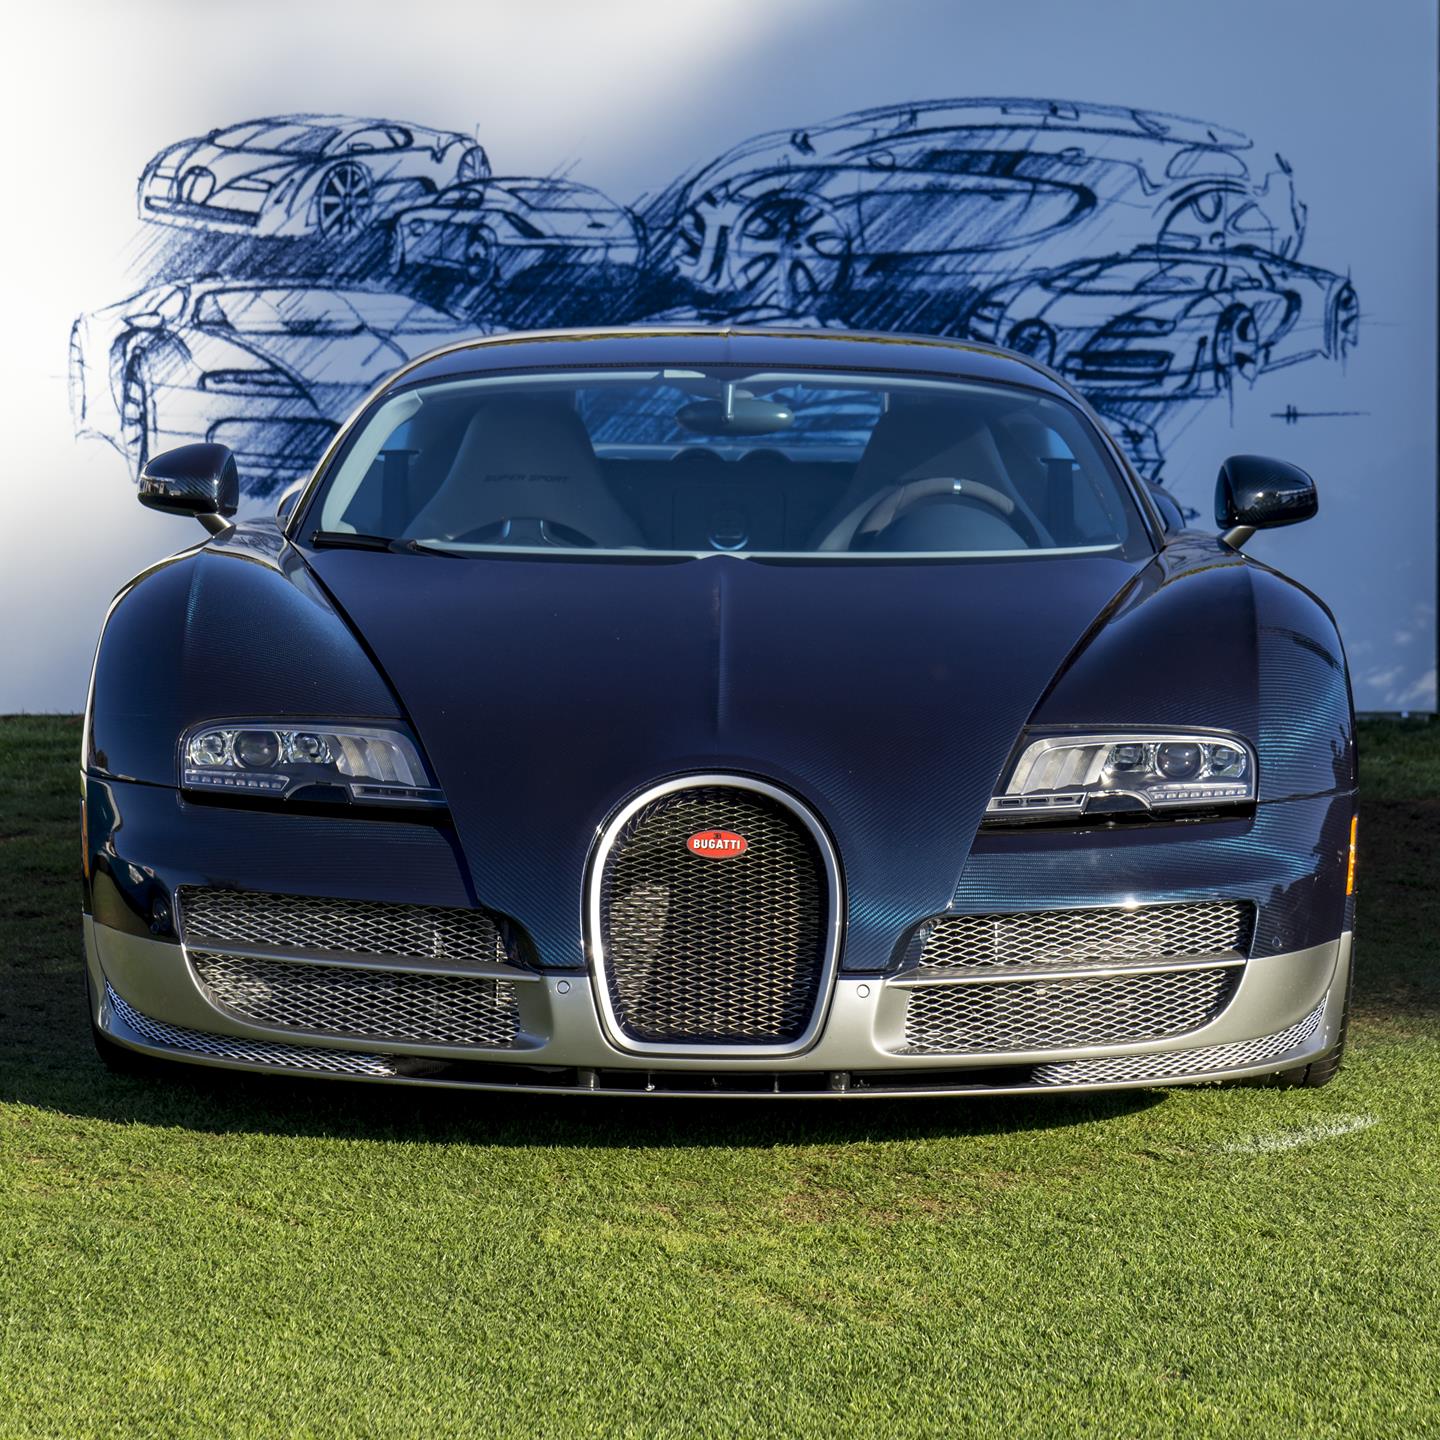 Bugatti 1500. Бугатти Вейрон. Бугатти Вейрон 16 4 super Sport. Bugatti Veyron автомобили Bugatti. Bugatti Veyron 16.4 super Sport 2010.